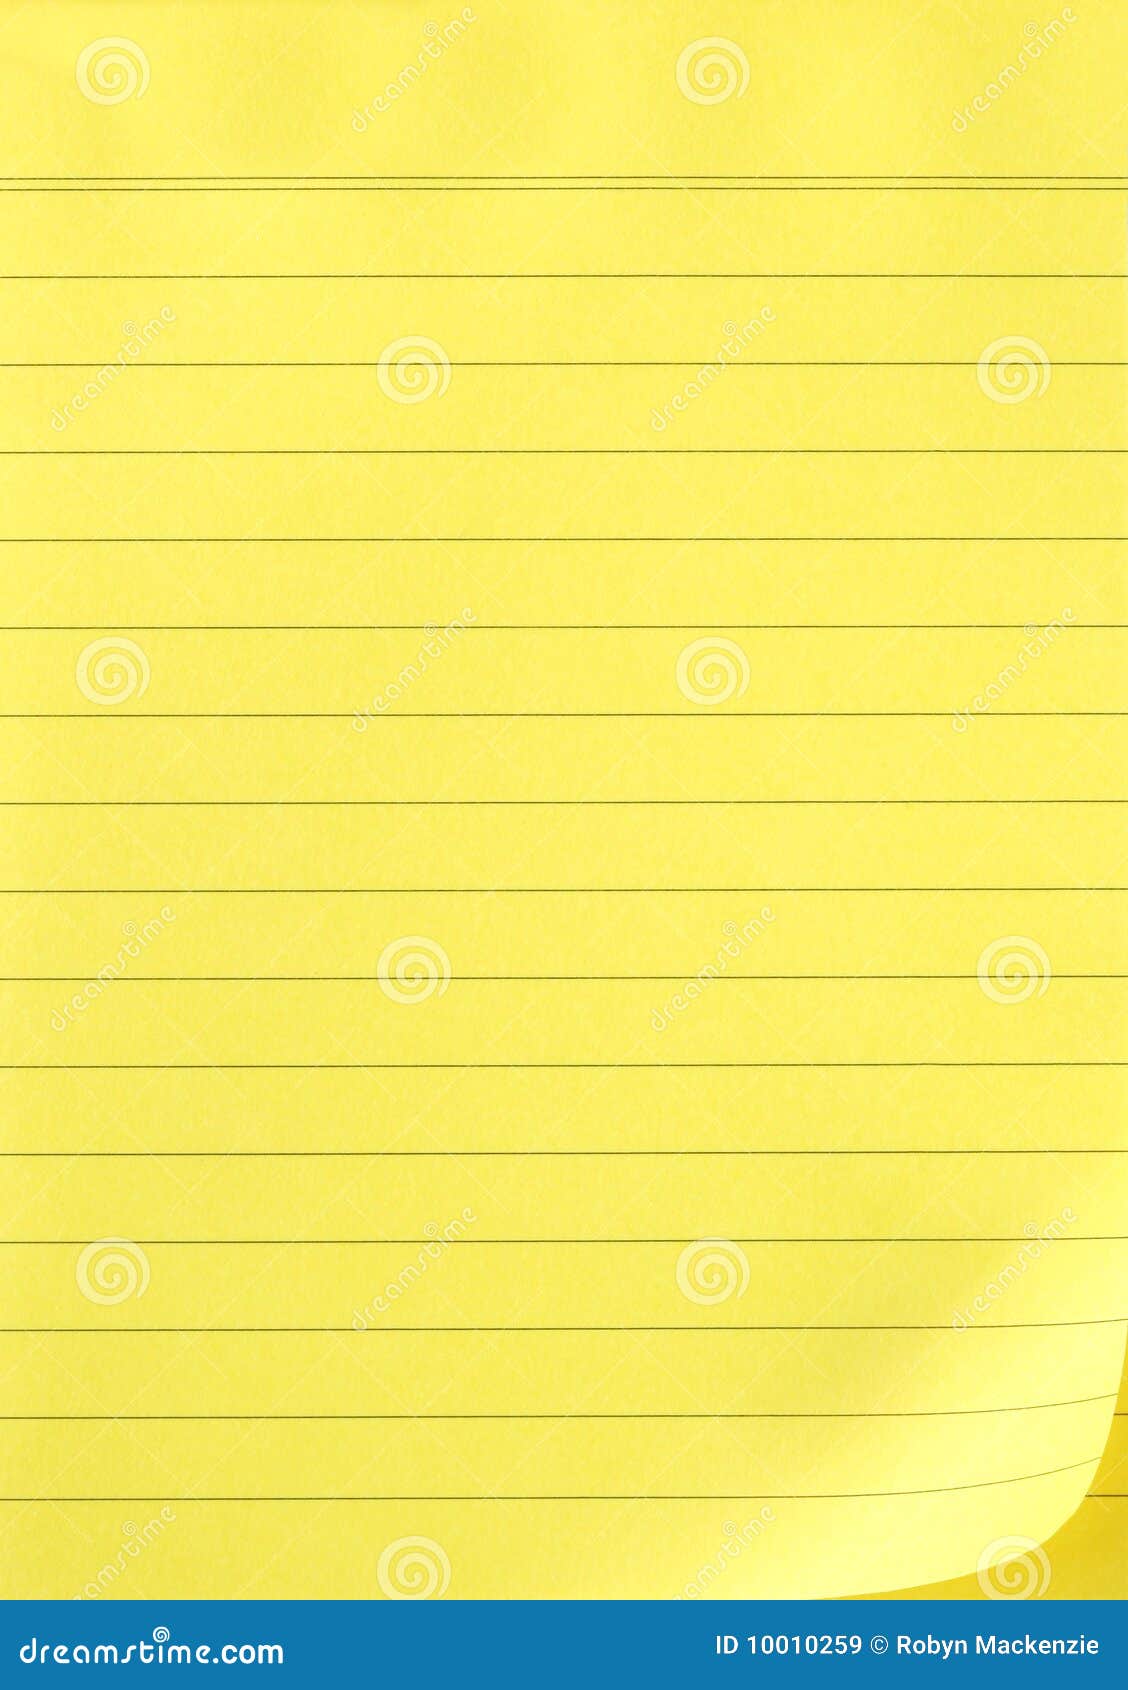 yellow notepaper